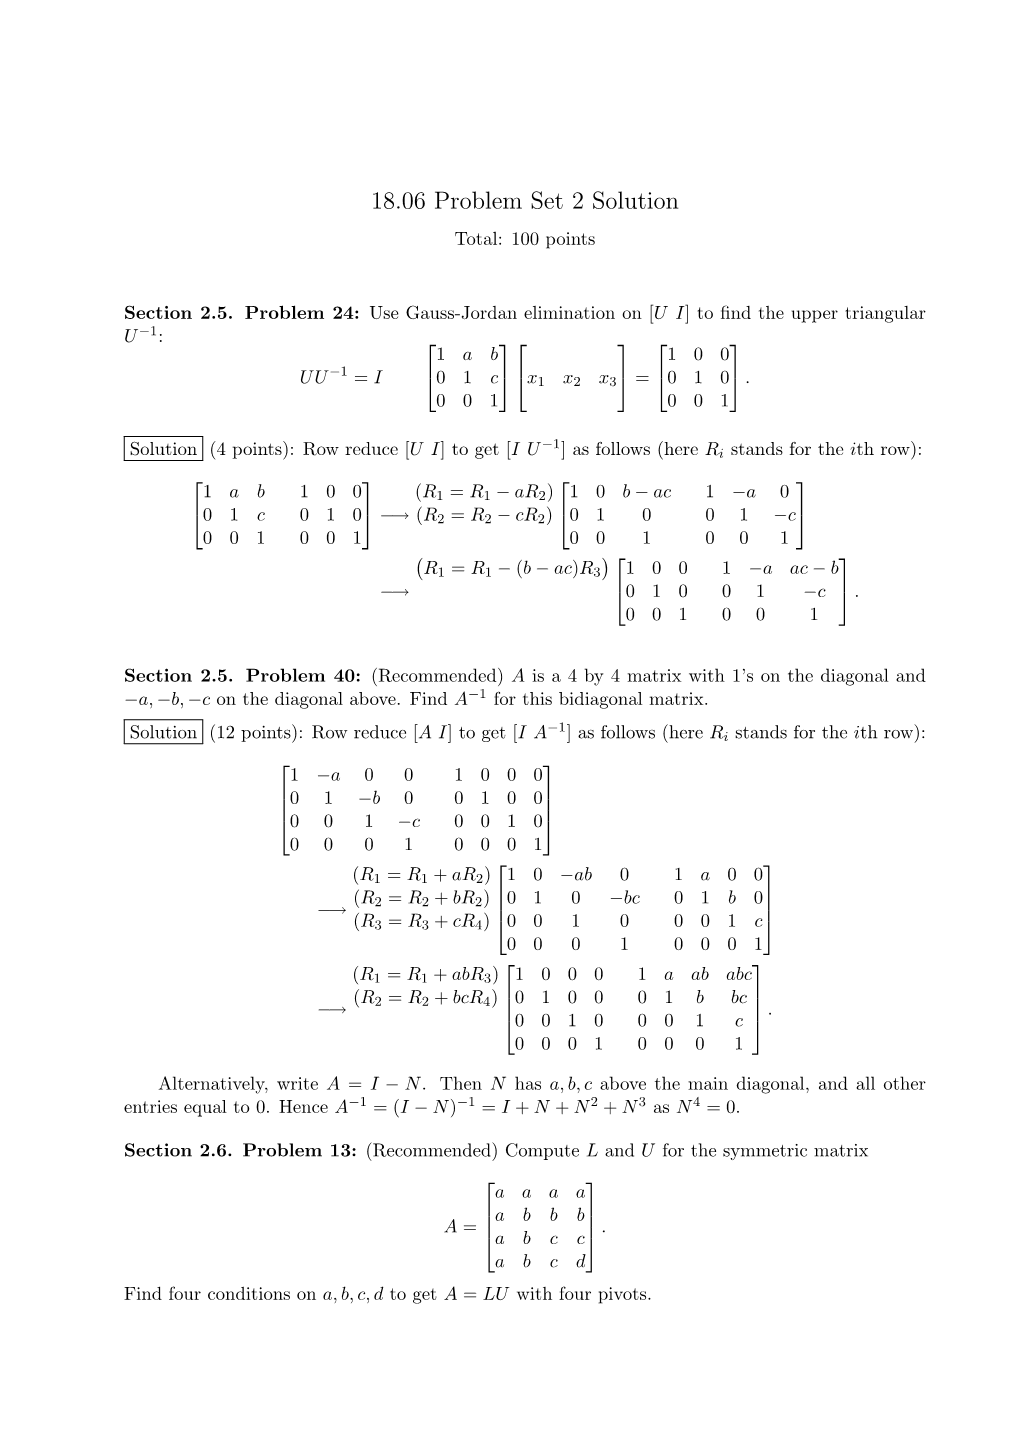 18.06 Linear Algebra, Problem Set 2 Solutions